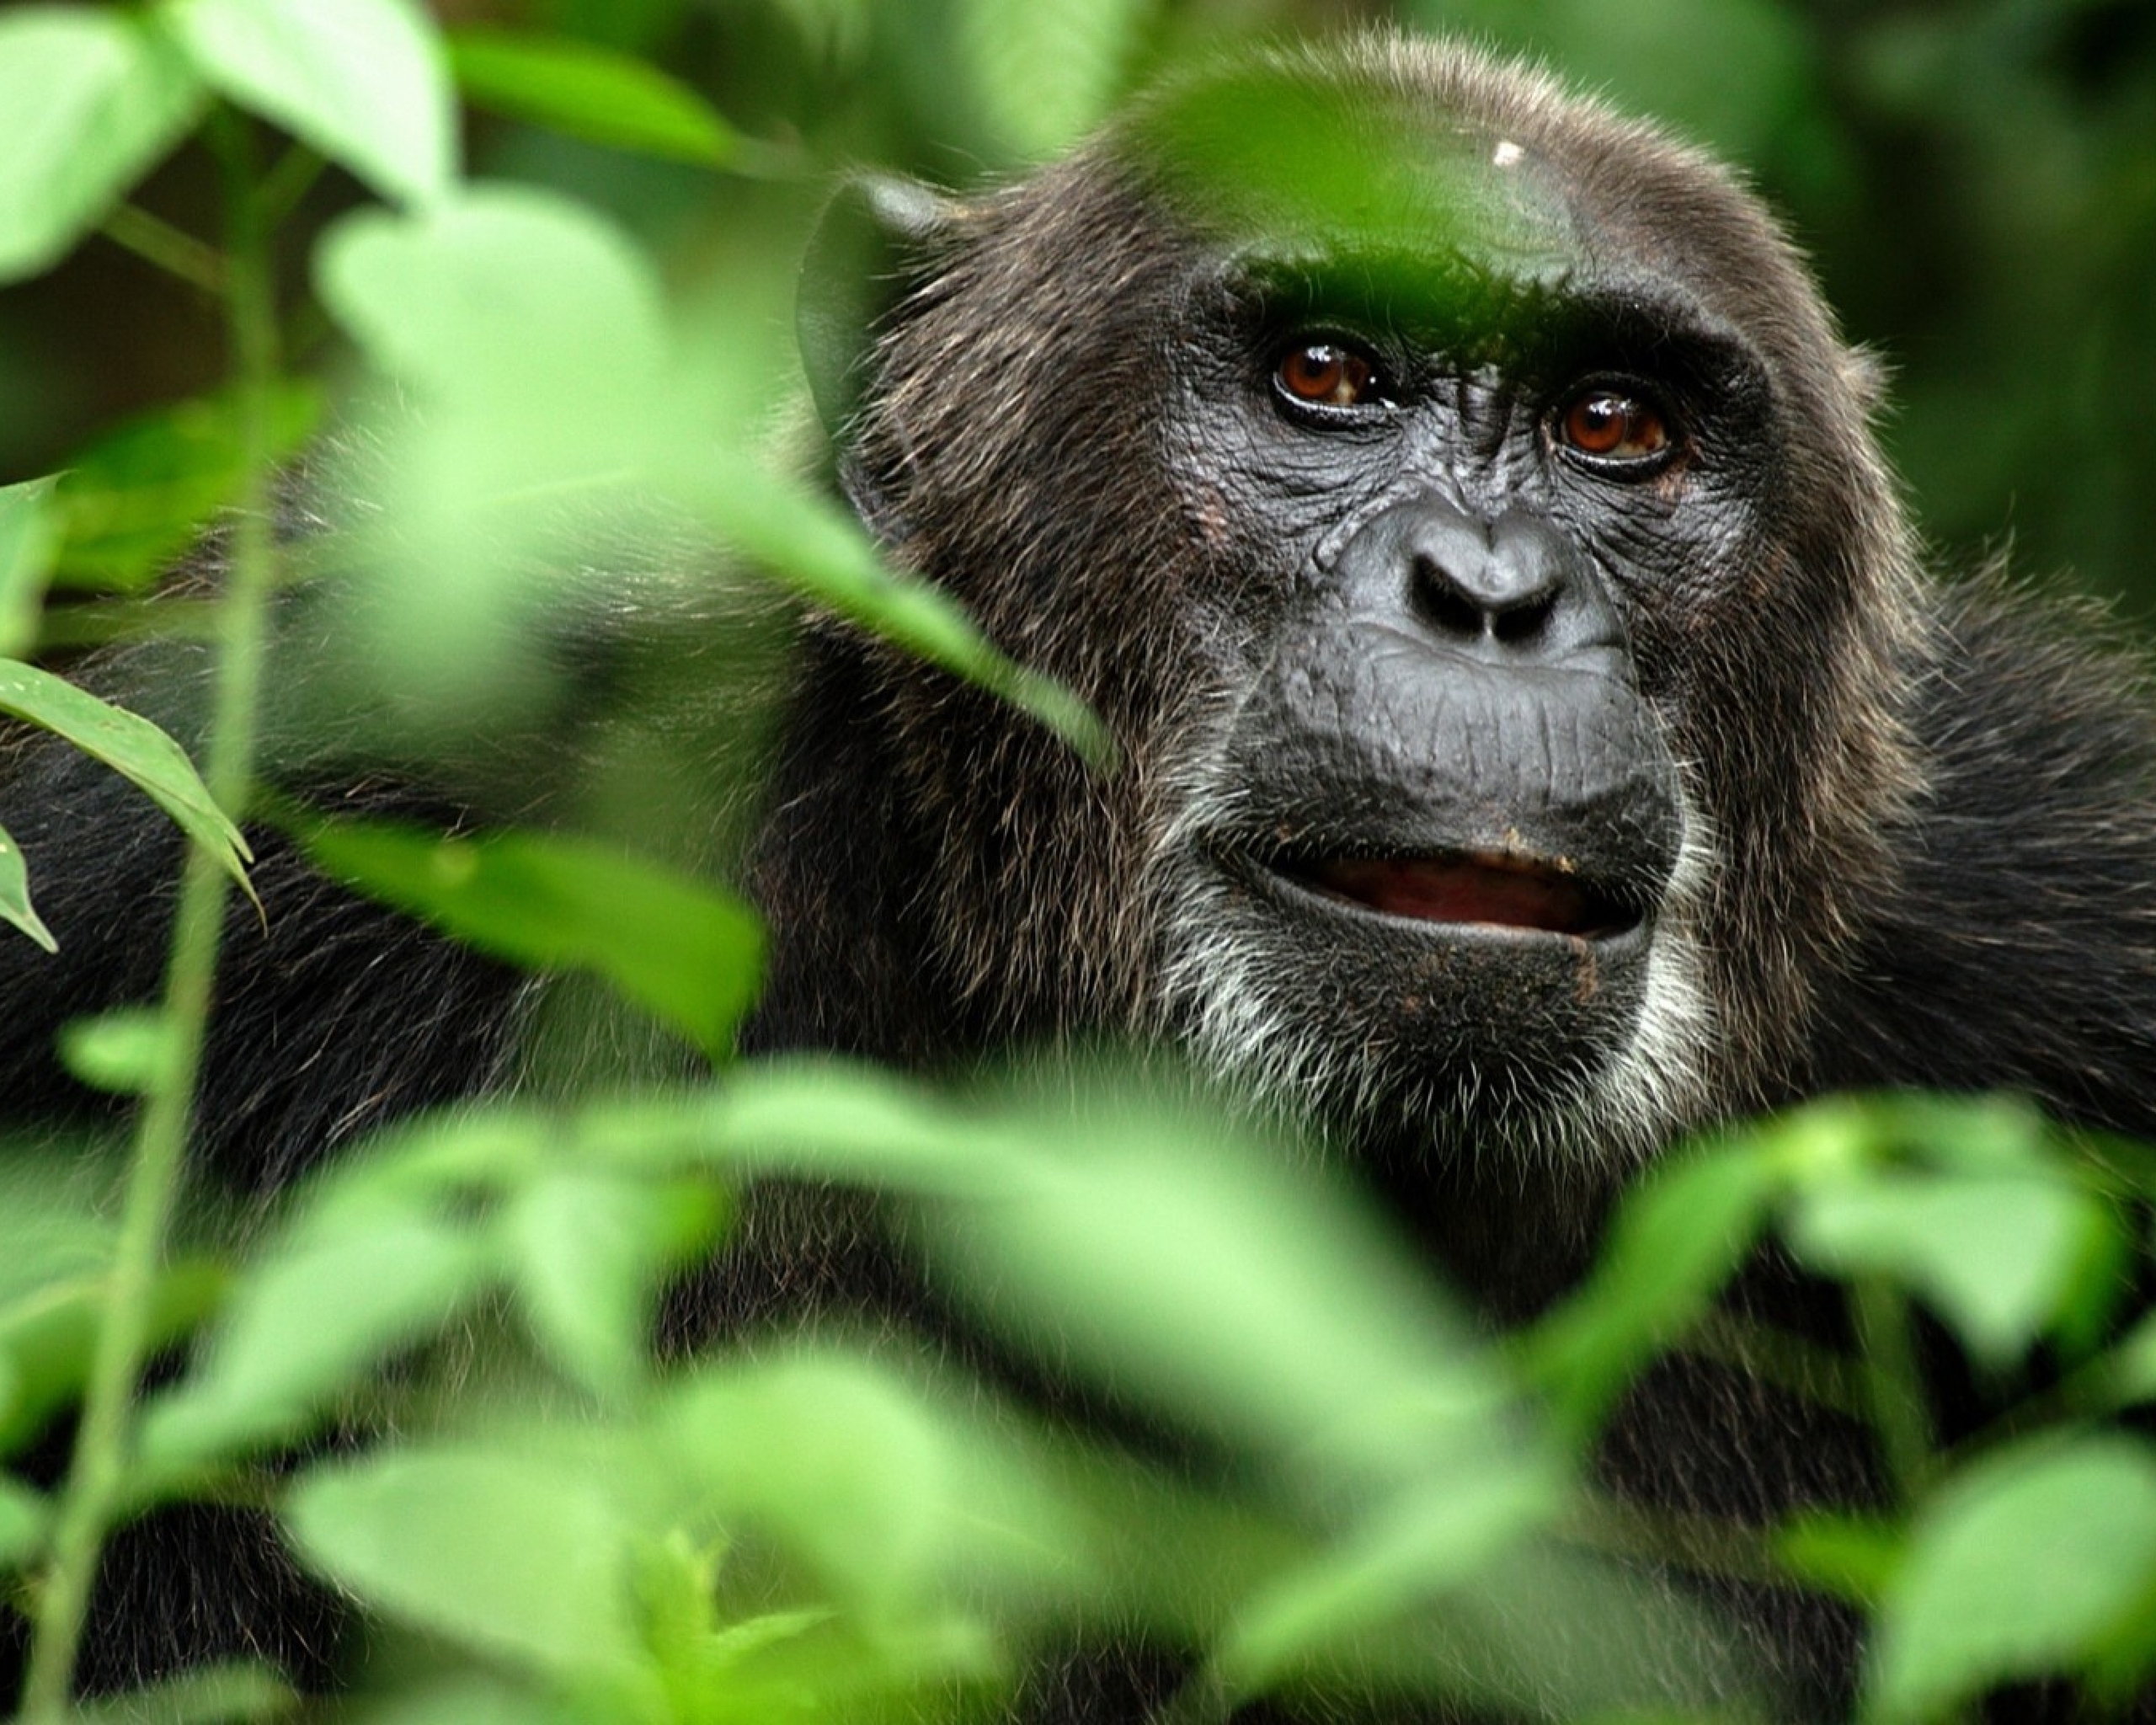 Картинка: Обезьяна, шимпанзе, джунгли, ветки, листья, морда, глаза